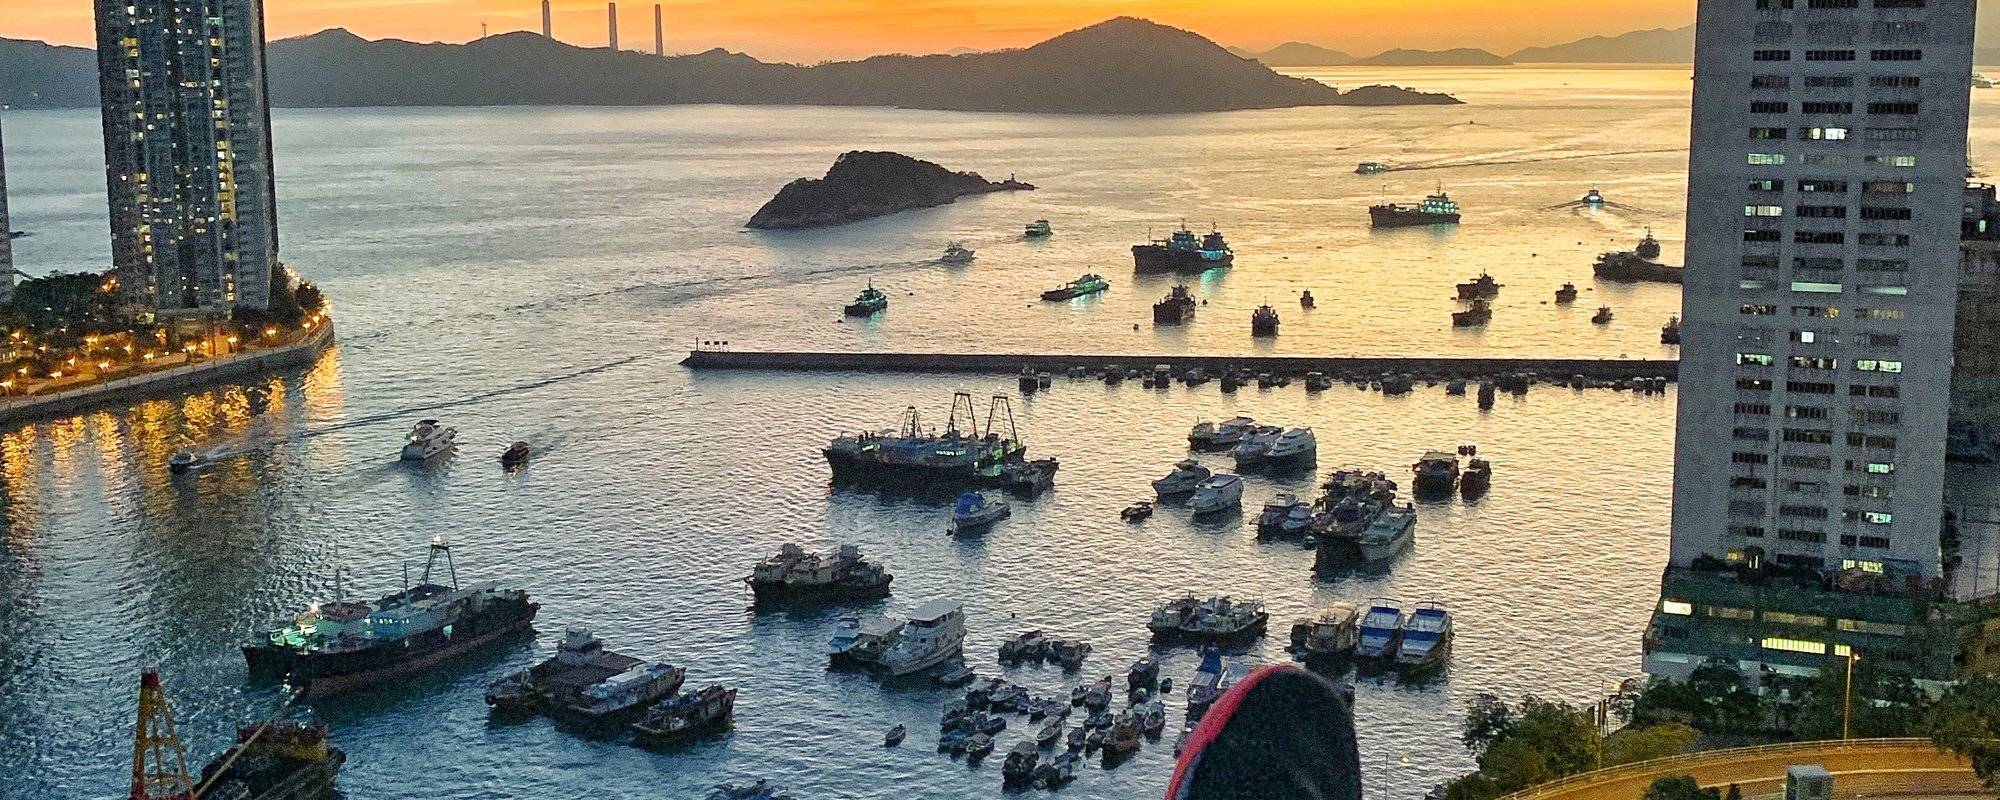 Hong Kong Island Culture Trip and Rooftop Sunset- Hong Kong [Day 7]